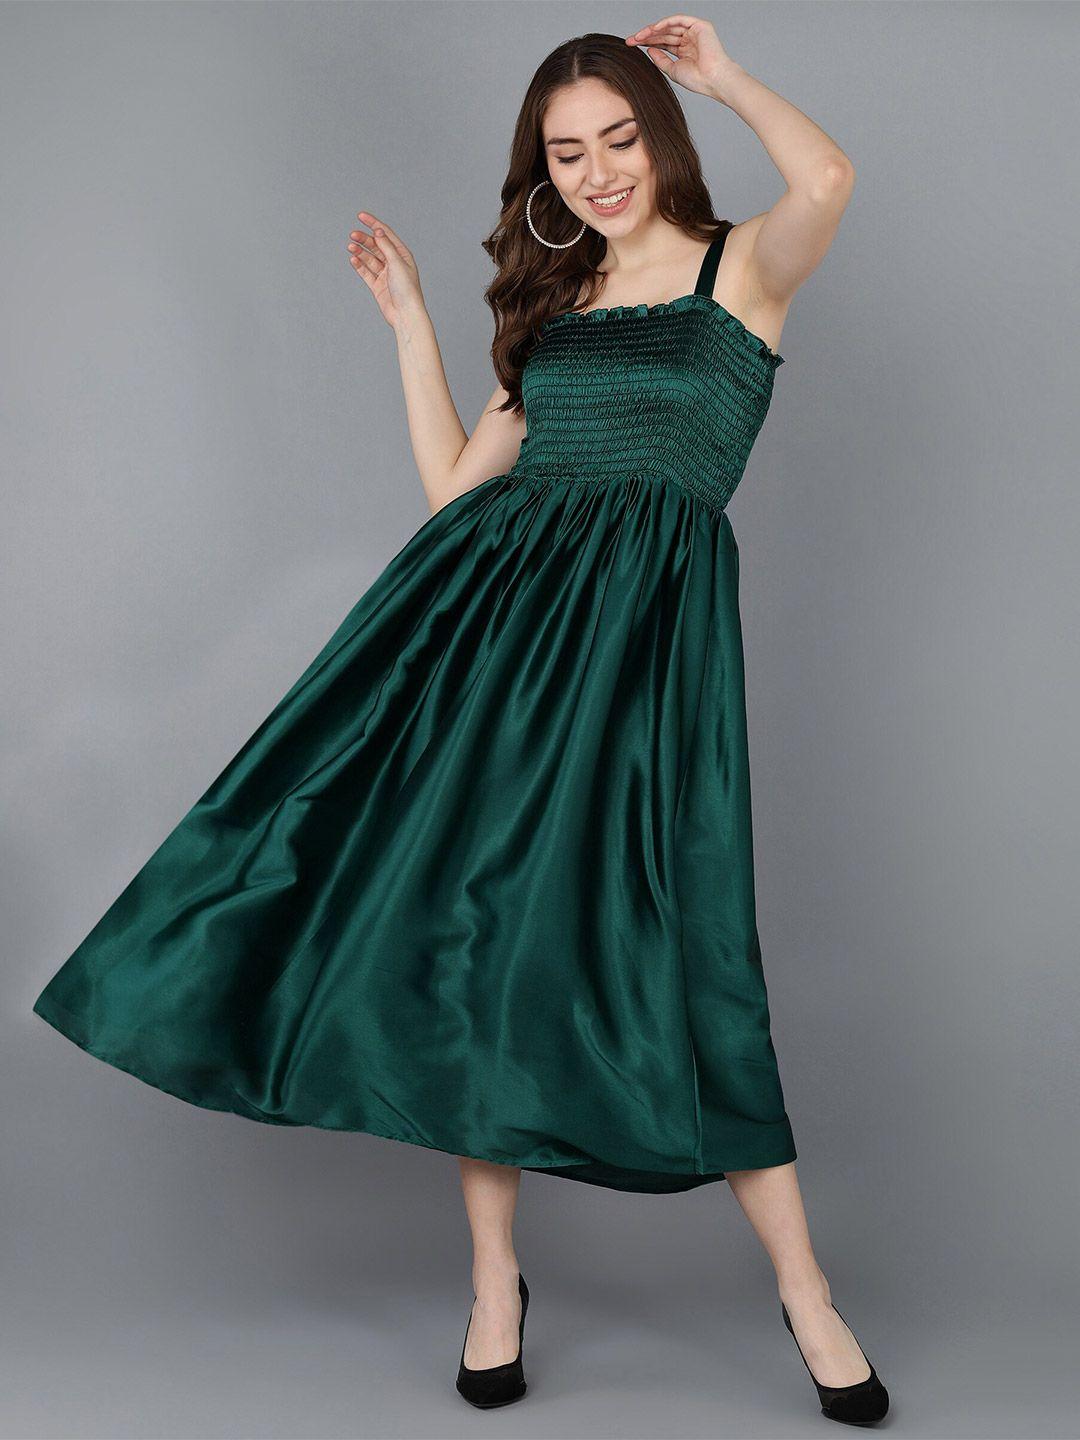 znx clothing green midi dress